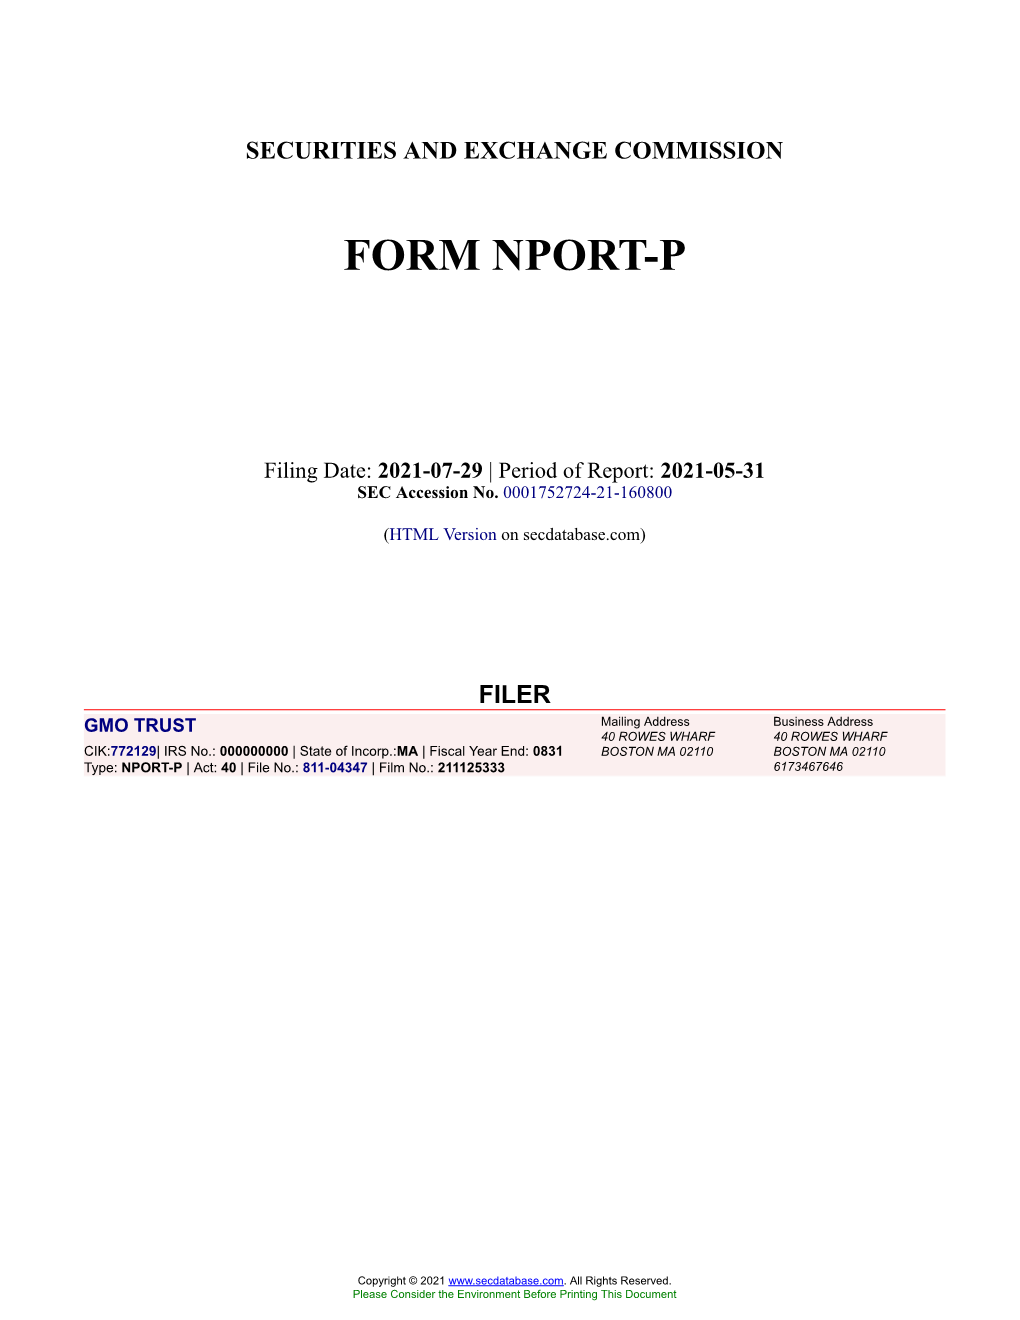 GMO TRUST Form NPORT-P Filed 2021-07-29